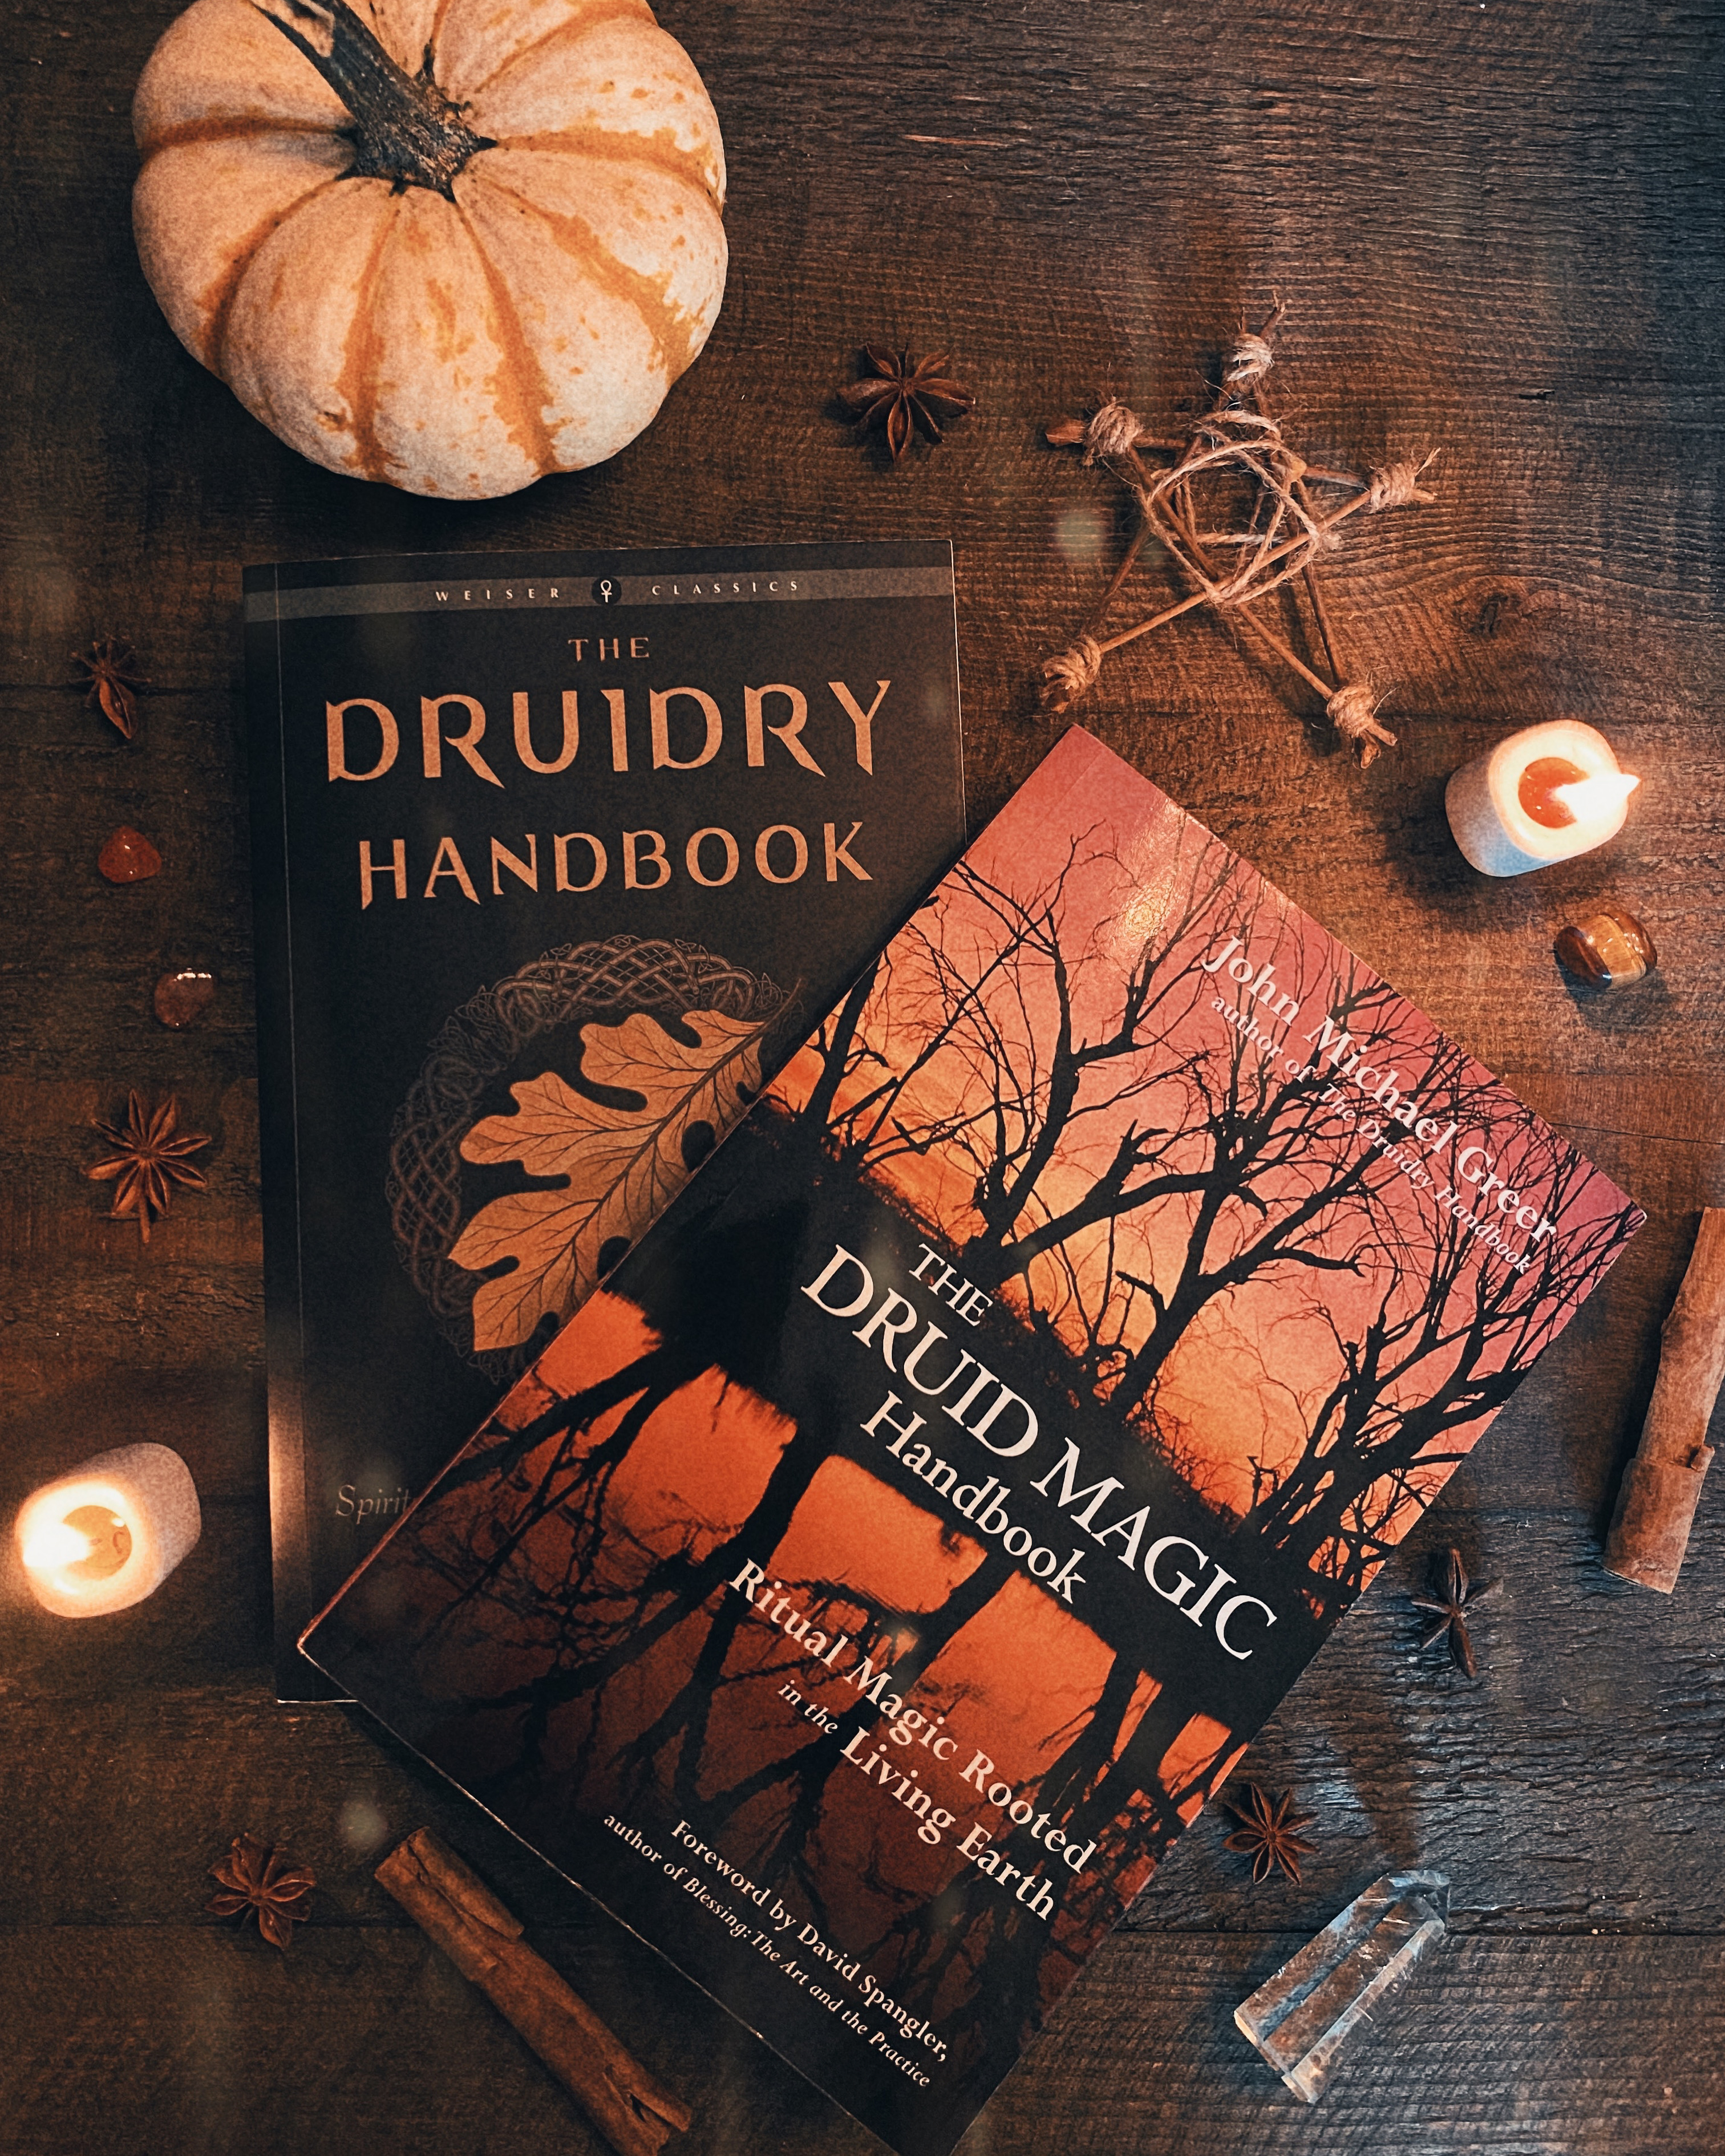 The Druidry Handbook and The Druid Magic Handbook